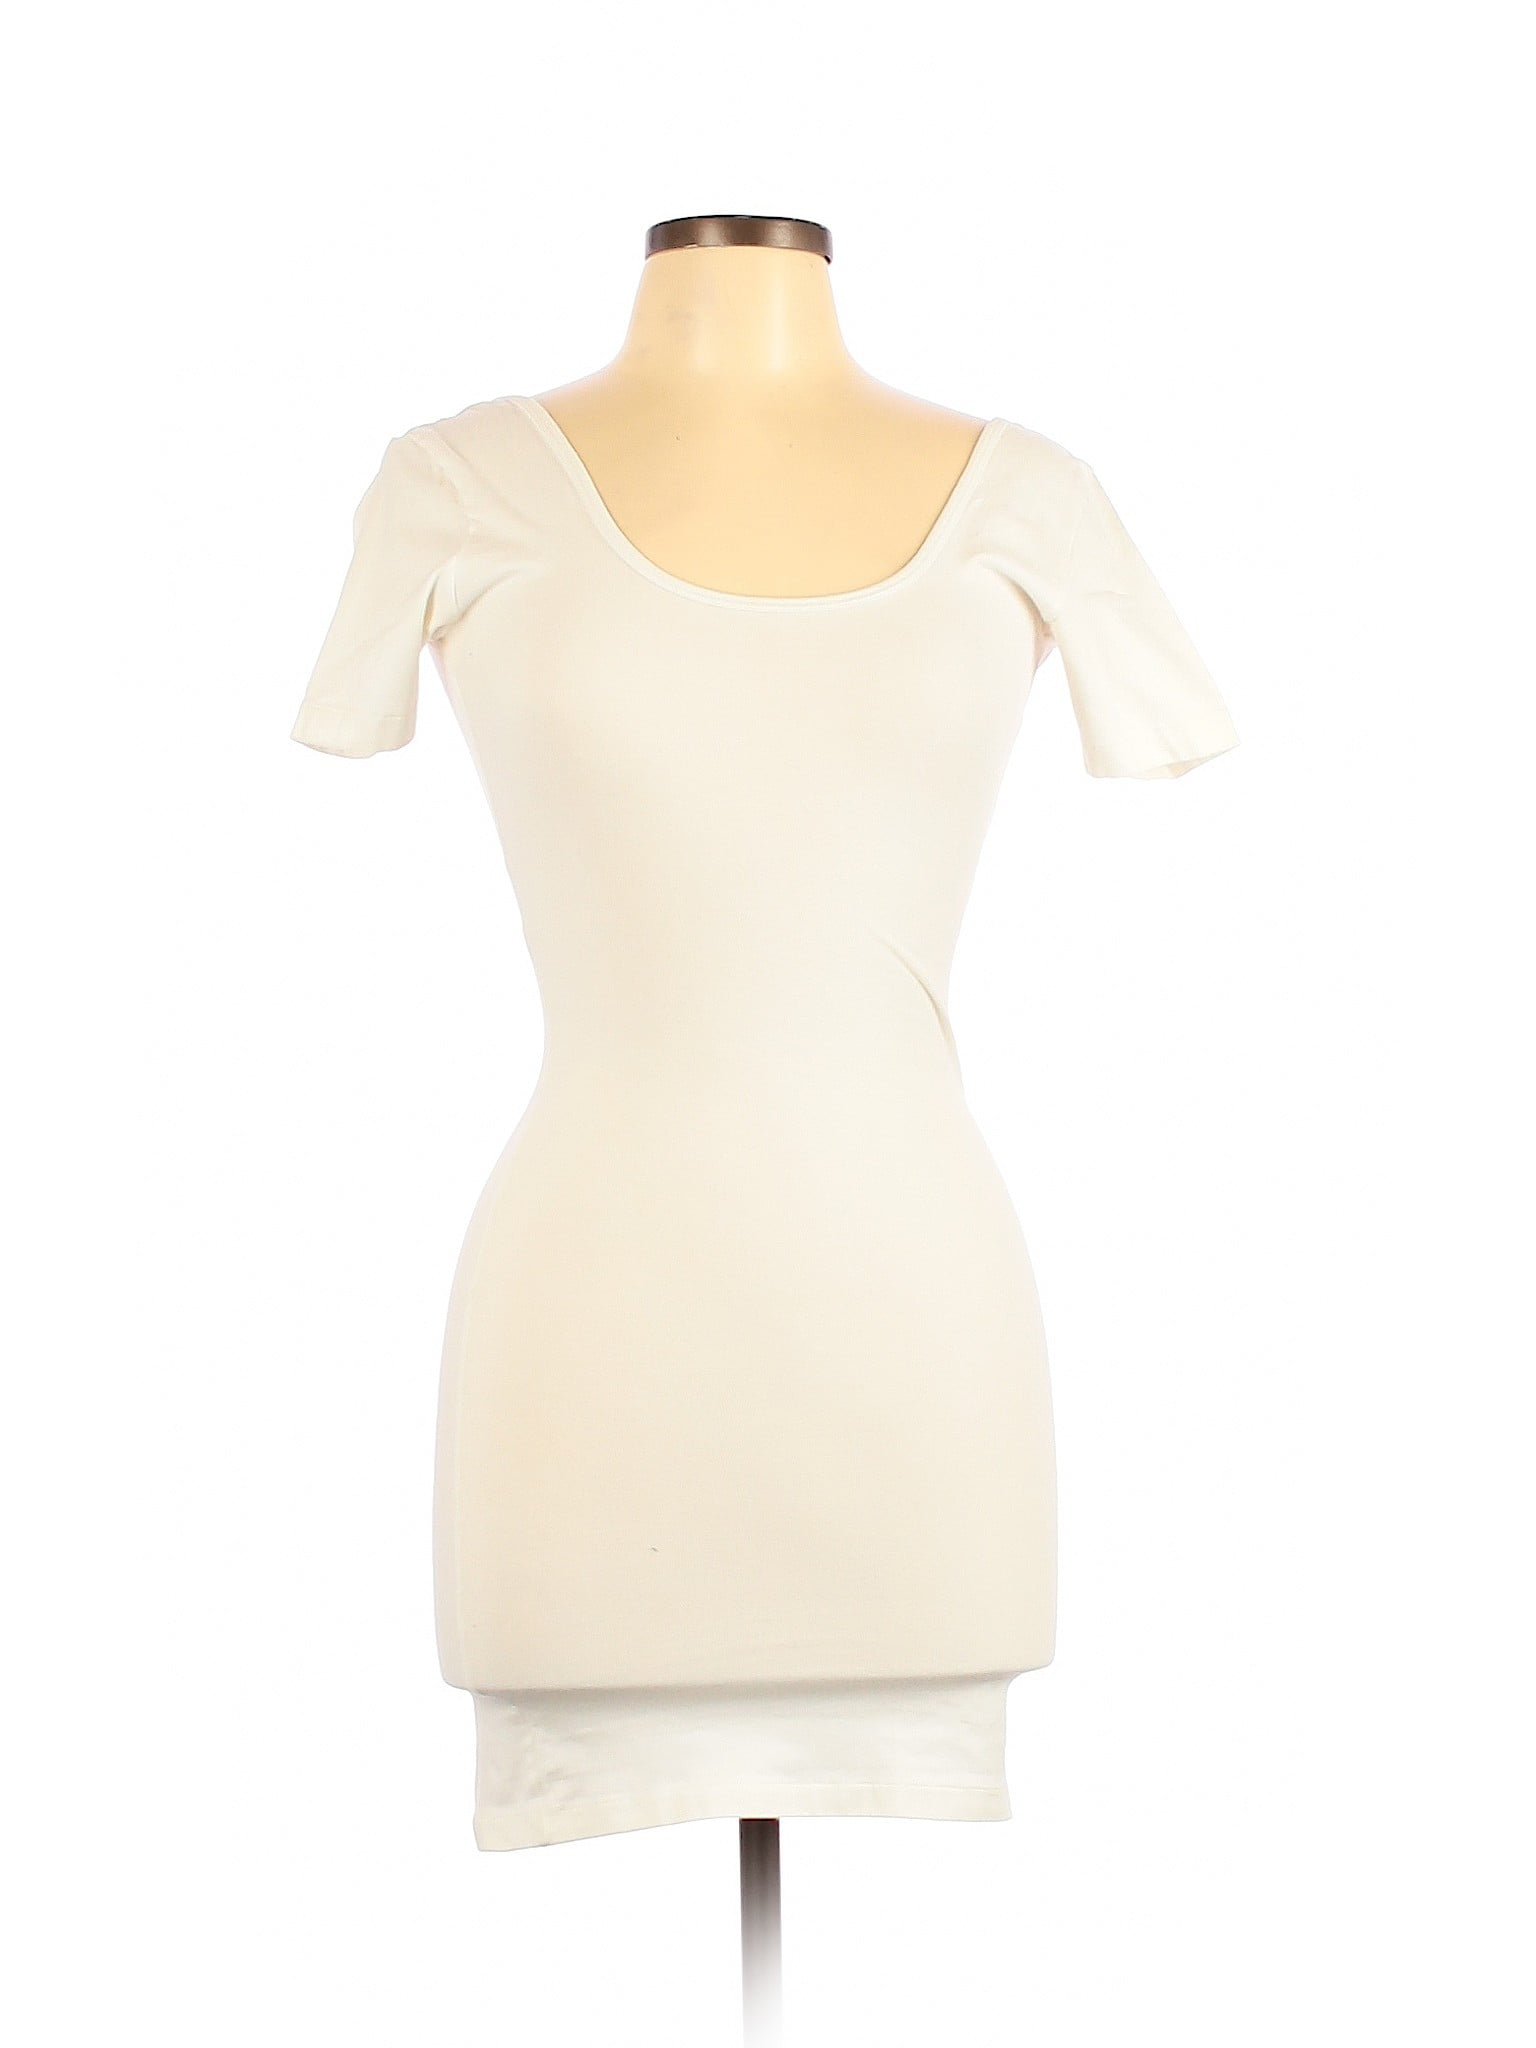 american apparel white dress